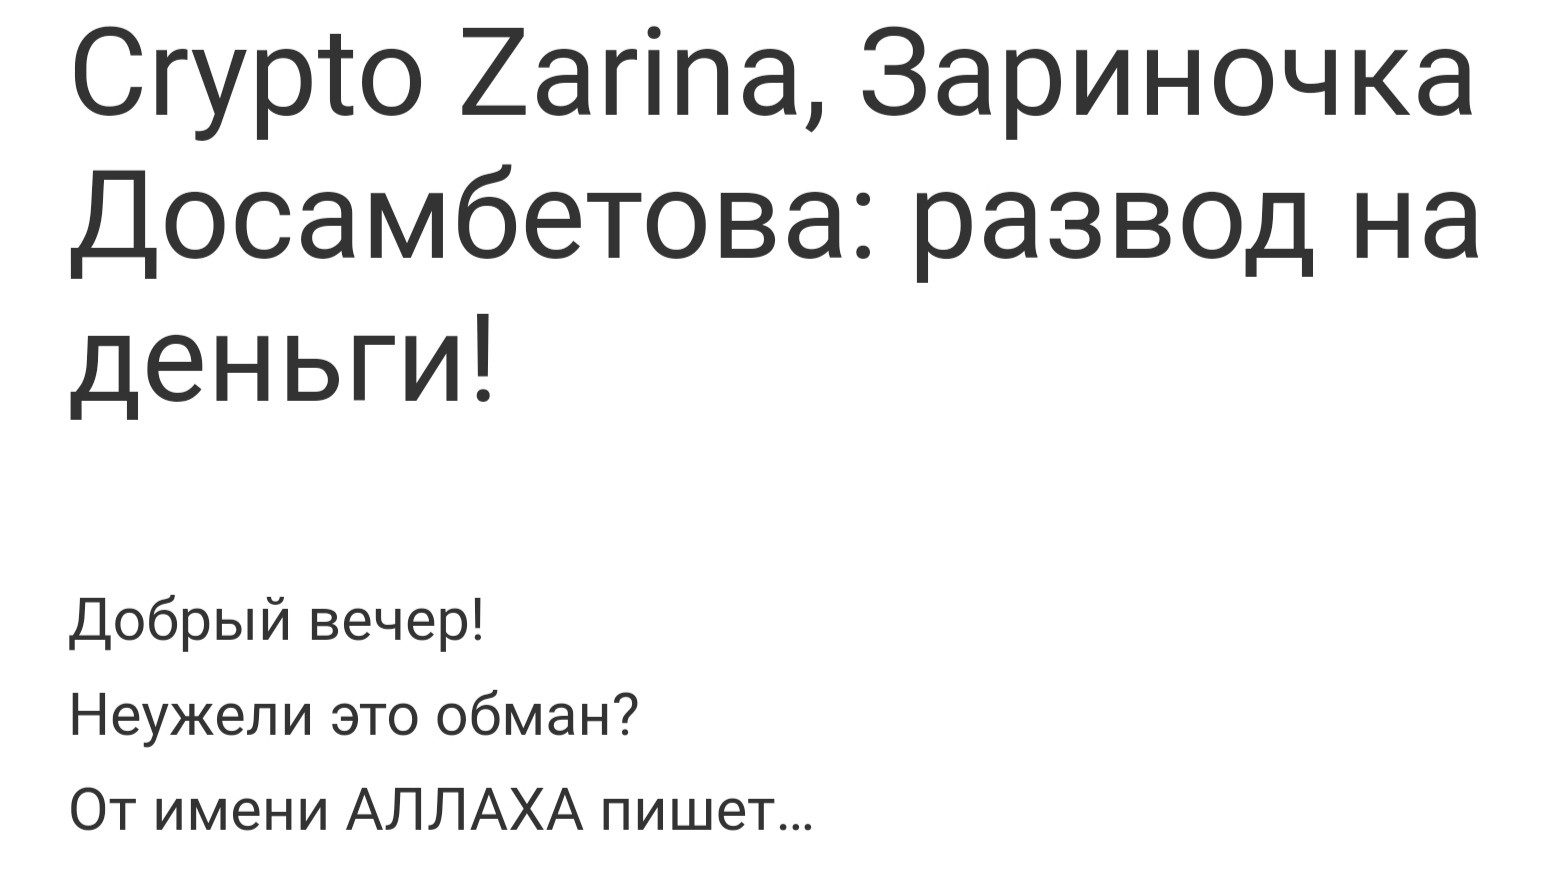 Crypto Zarina отзывы